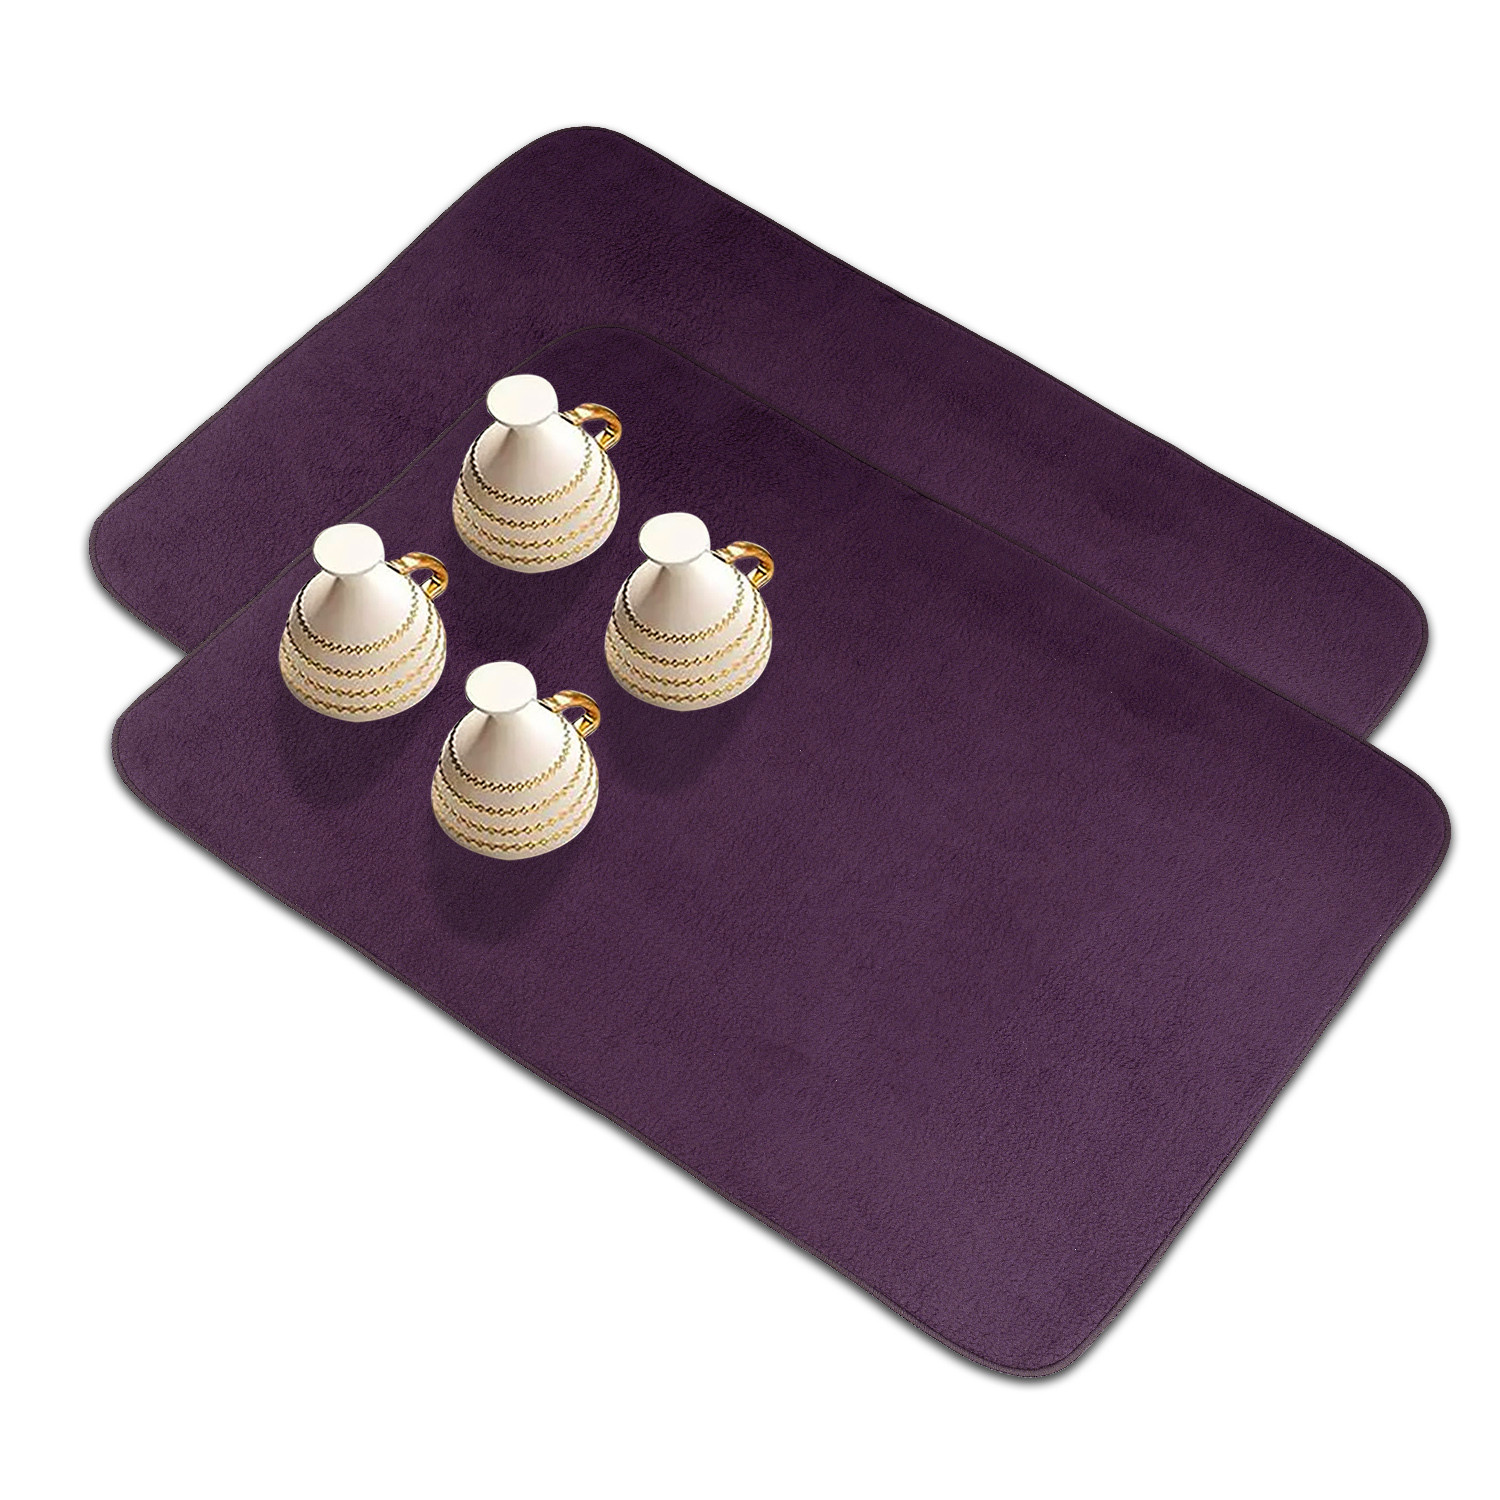 Kuber Industries Dish Dry Mat | Microfiber Drying Mat | Kitchen Drying Mat | Reversible Mat | Kitchen Absorbent Mat | Dish Dry Mat for Kitchen | 38x50 | Dark Purple